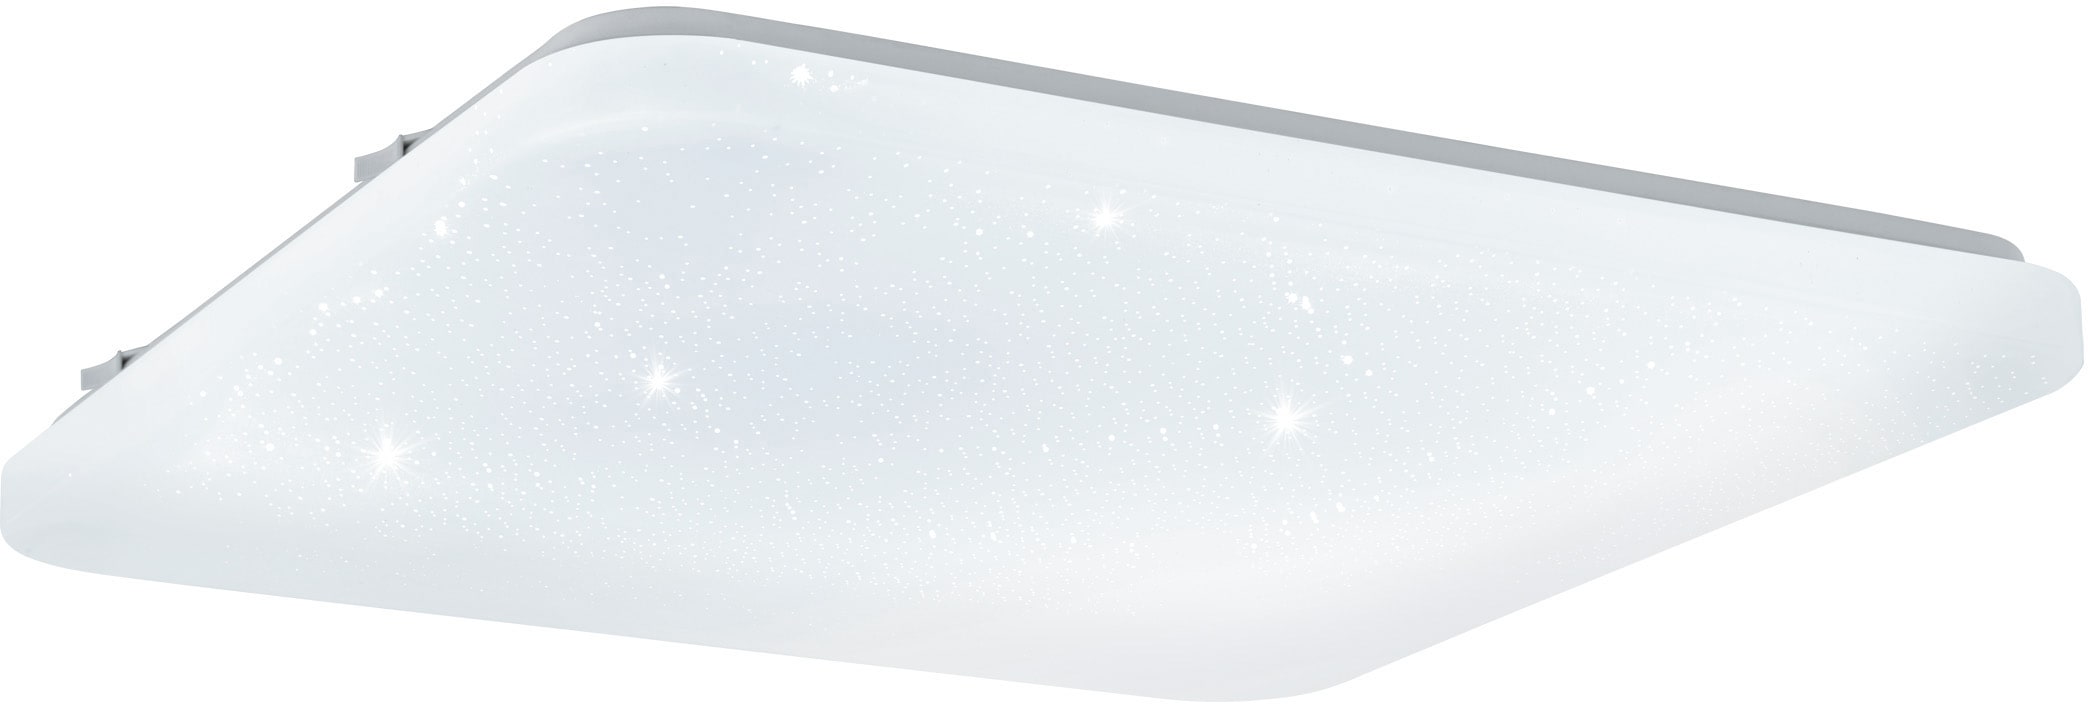 L43 B33 x x weiß 3600lm, Lampe 1 LED Schlafzimmerlampe - / / H7 Warmweiß, - - LED-Platine x LED-Board, Deckenleuchte / »FRANIA-S«, - inkl. 33W, (je 3000K) Deckenlampe EGLO Sternenhimmel cm